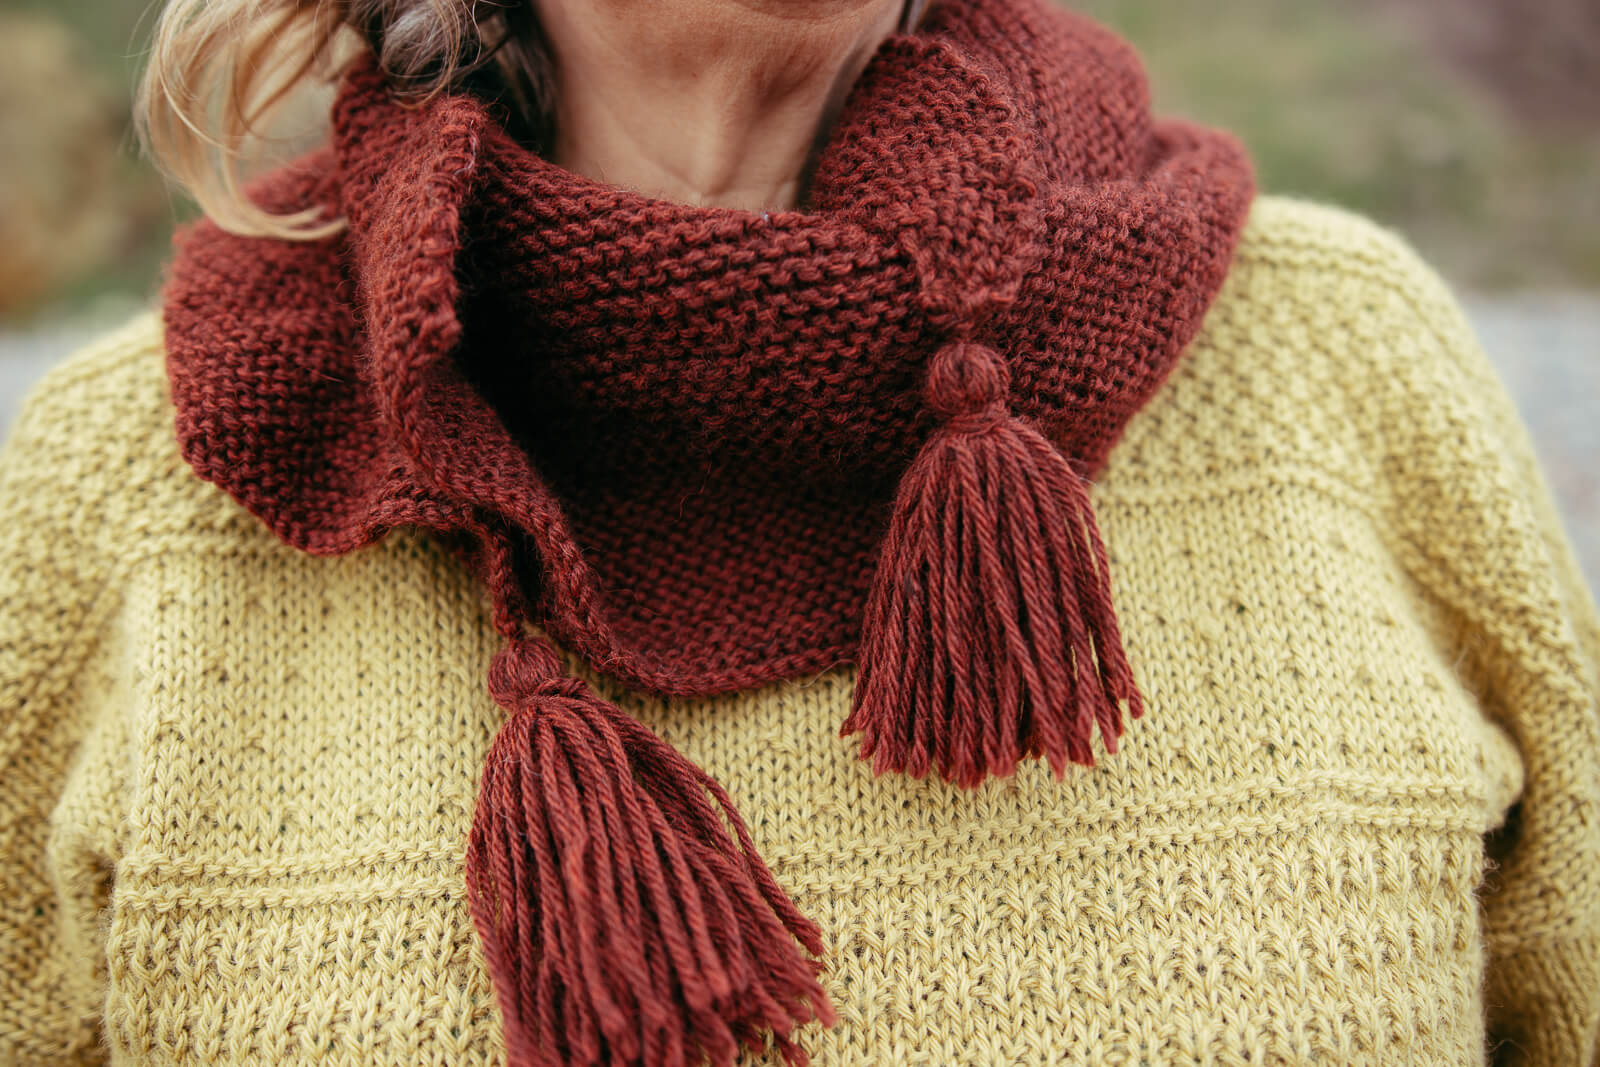 Restful hug shawl knitting kit, made using alpaca wool from British and Irish alpaca farms